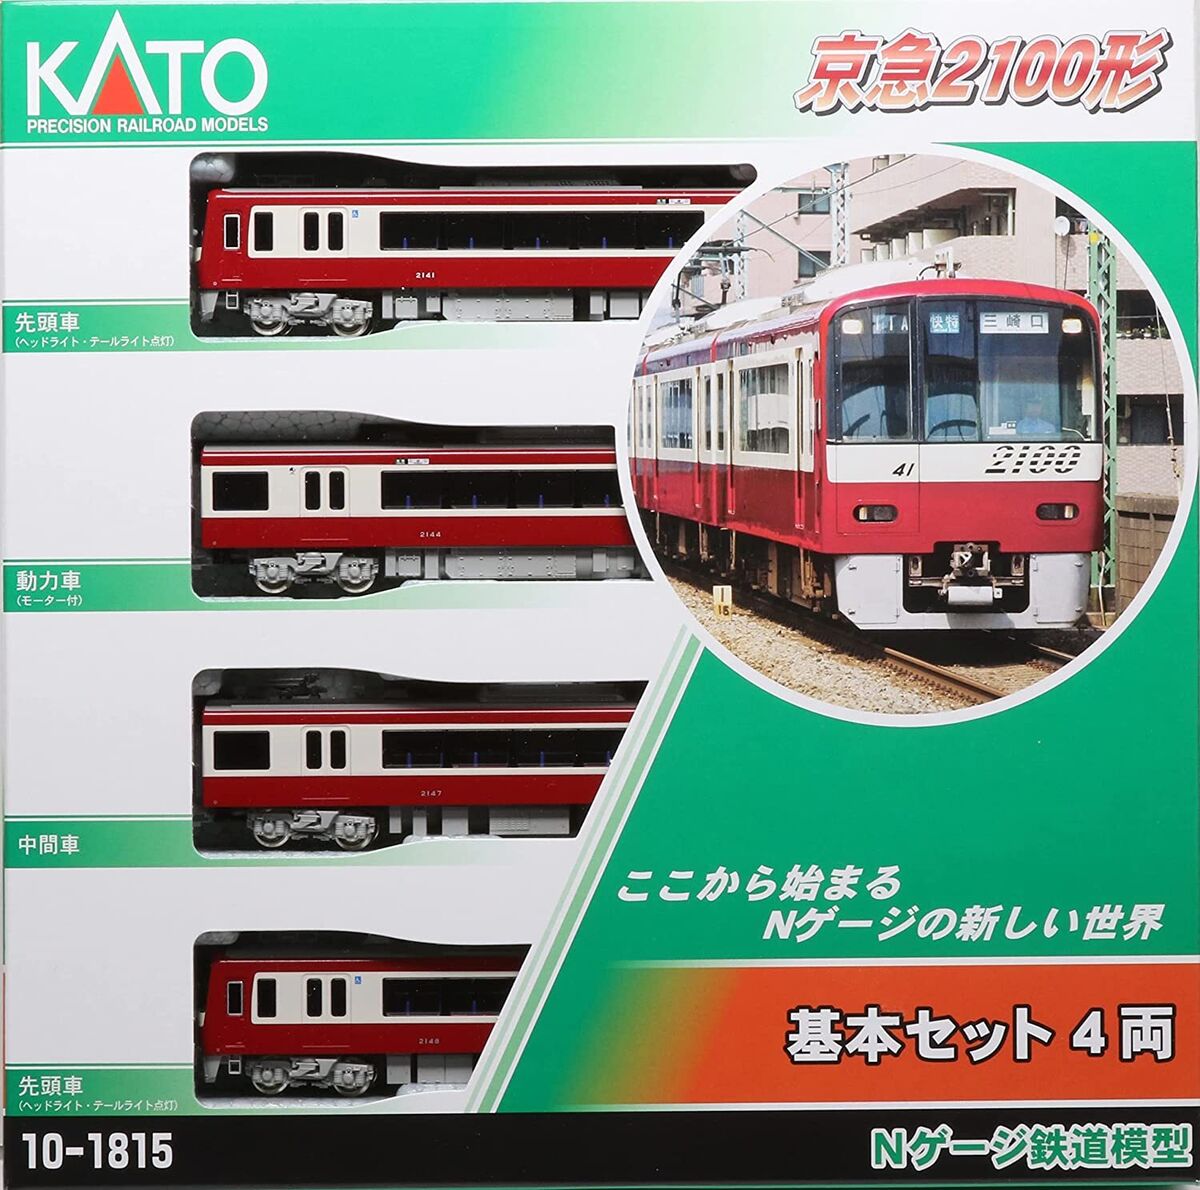 KATO 10-1815 N Scale Keikyu 2100 Basic Set 4 Car Set Railway Model new F/S